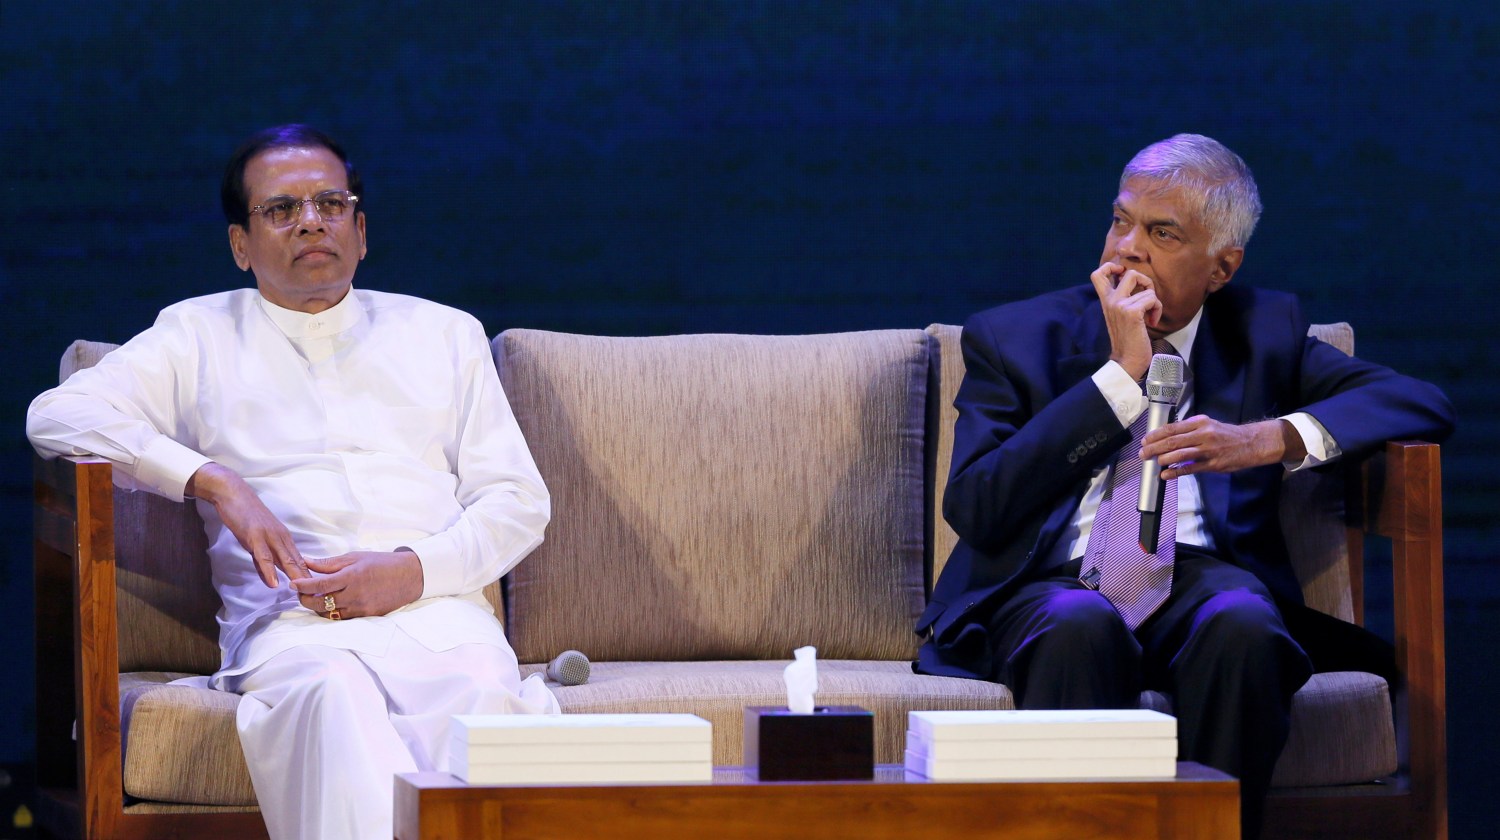 Sri Lanka's Prime Minister Ranil Wickremesinghe looks on next to Sri Lanka's President Maithripala Sirisena during the "Vision 2025" future plans of Sri Lanka launching ceremony in Colombo, Sri Lanka September 4, 2017. REUTERS/Dinuka Liyanawatte - RC166B794690